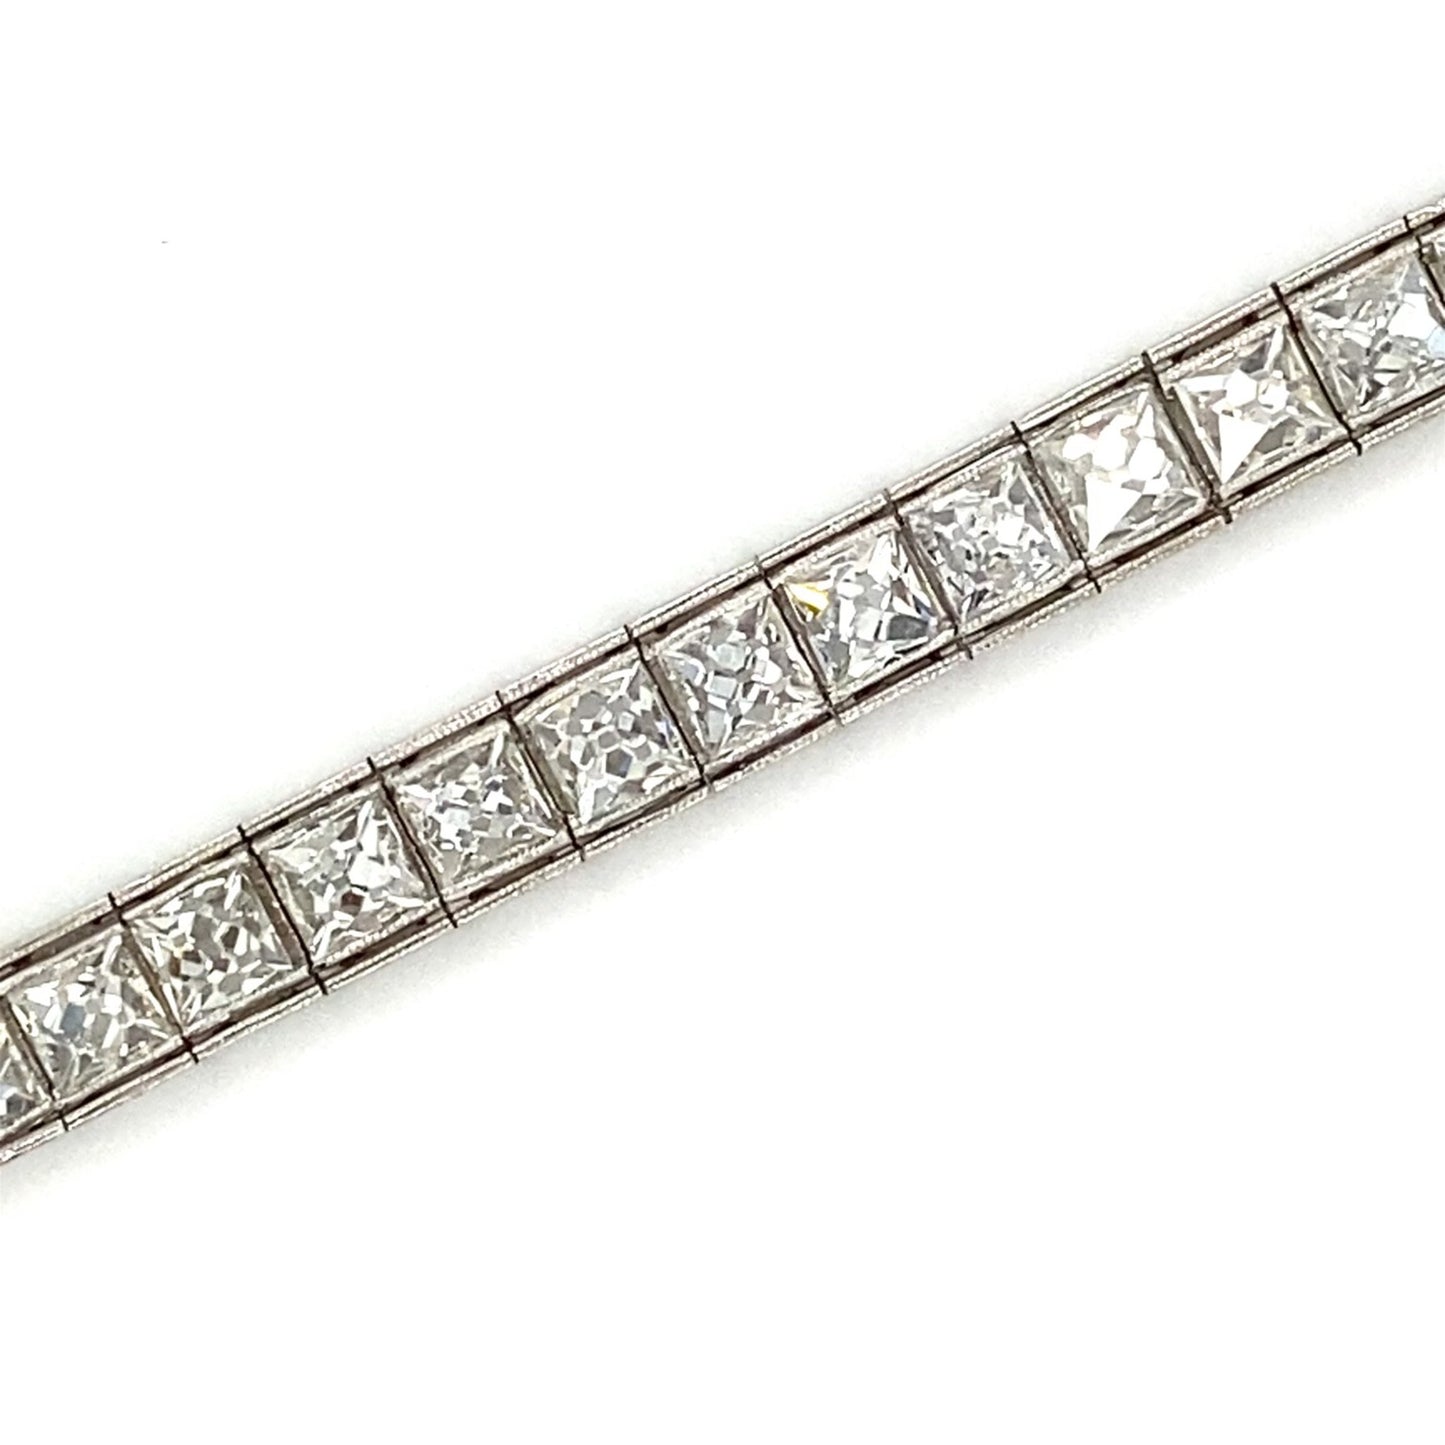 1930s Platinum Diamond Bracelet close-up details